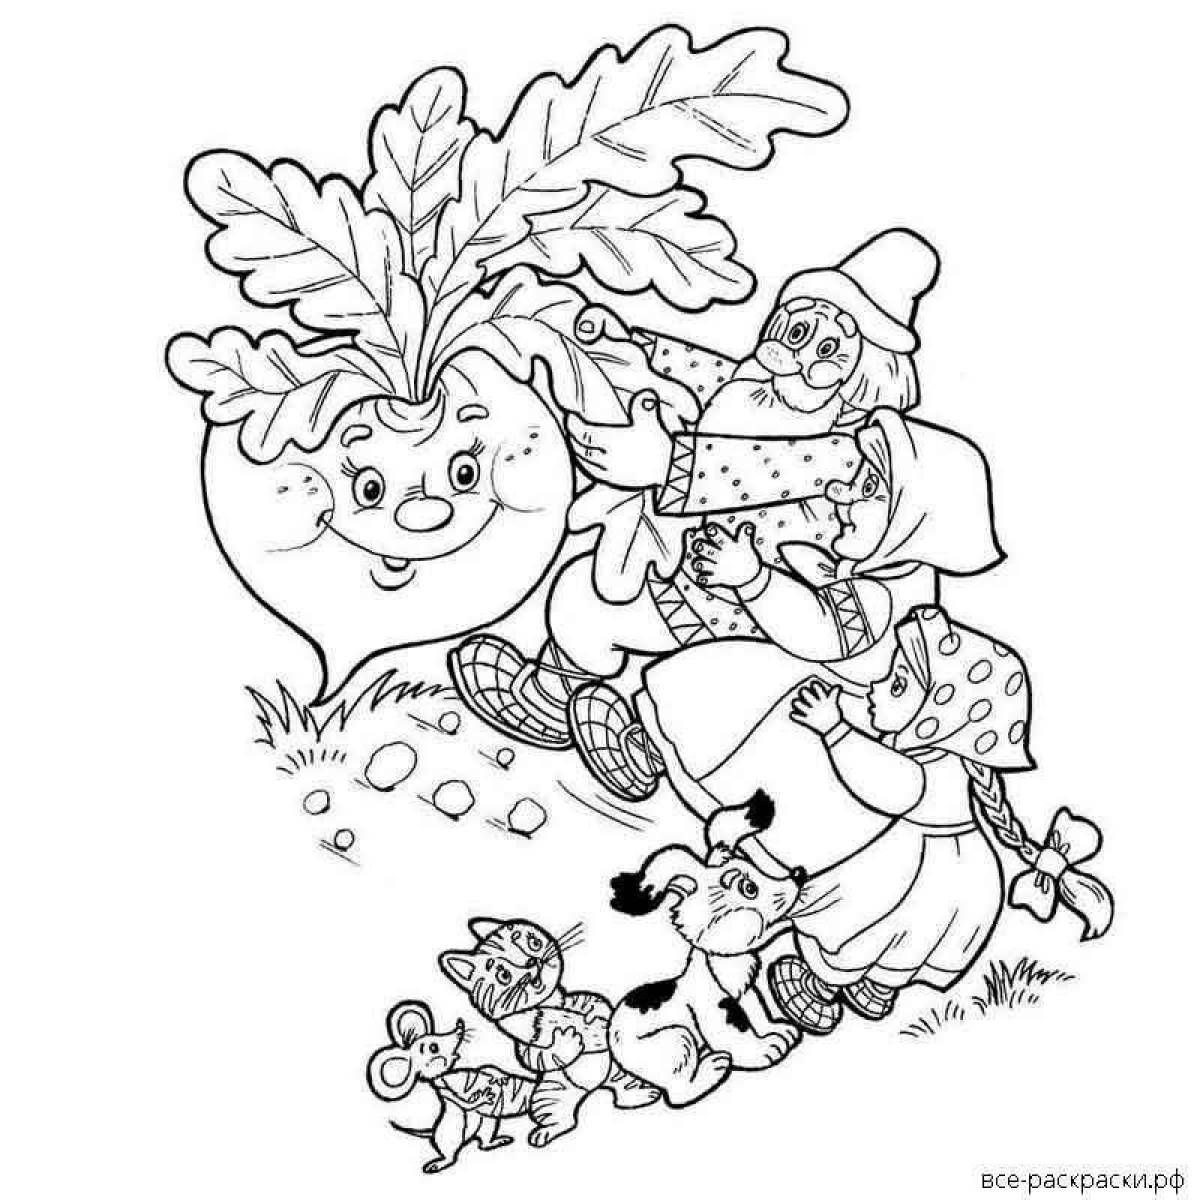 Cute turnip coloring book for preschoolers